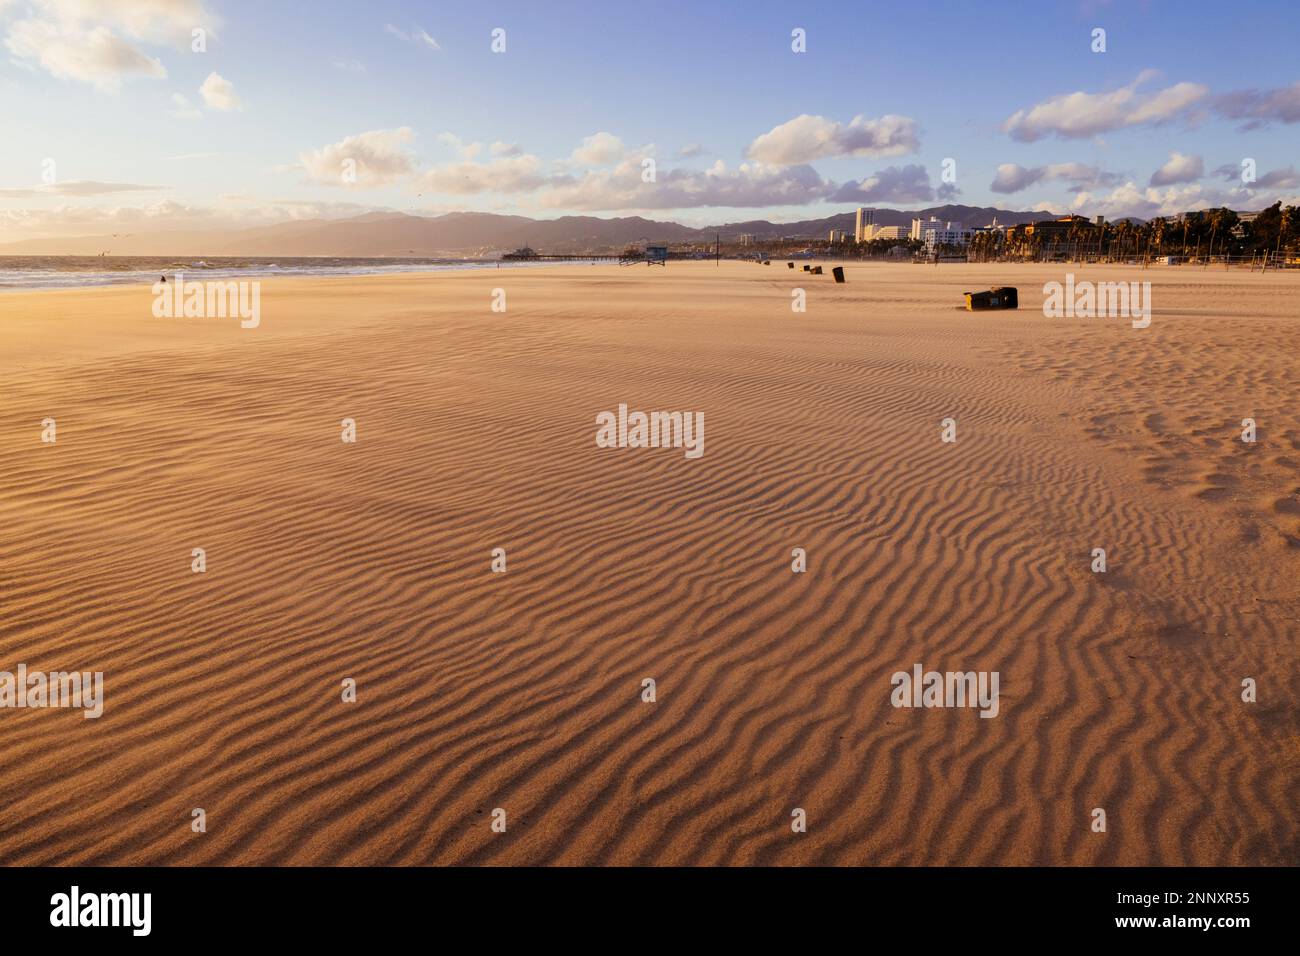 Landscape with rippled sand on beach, Zuma Beach, Malibu, California, USA Stock Photo